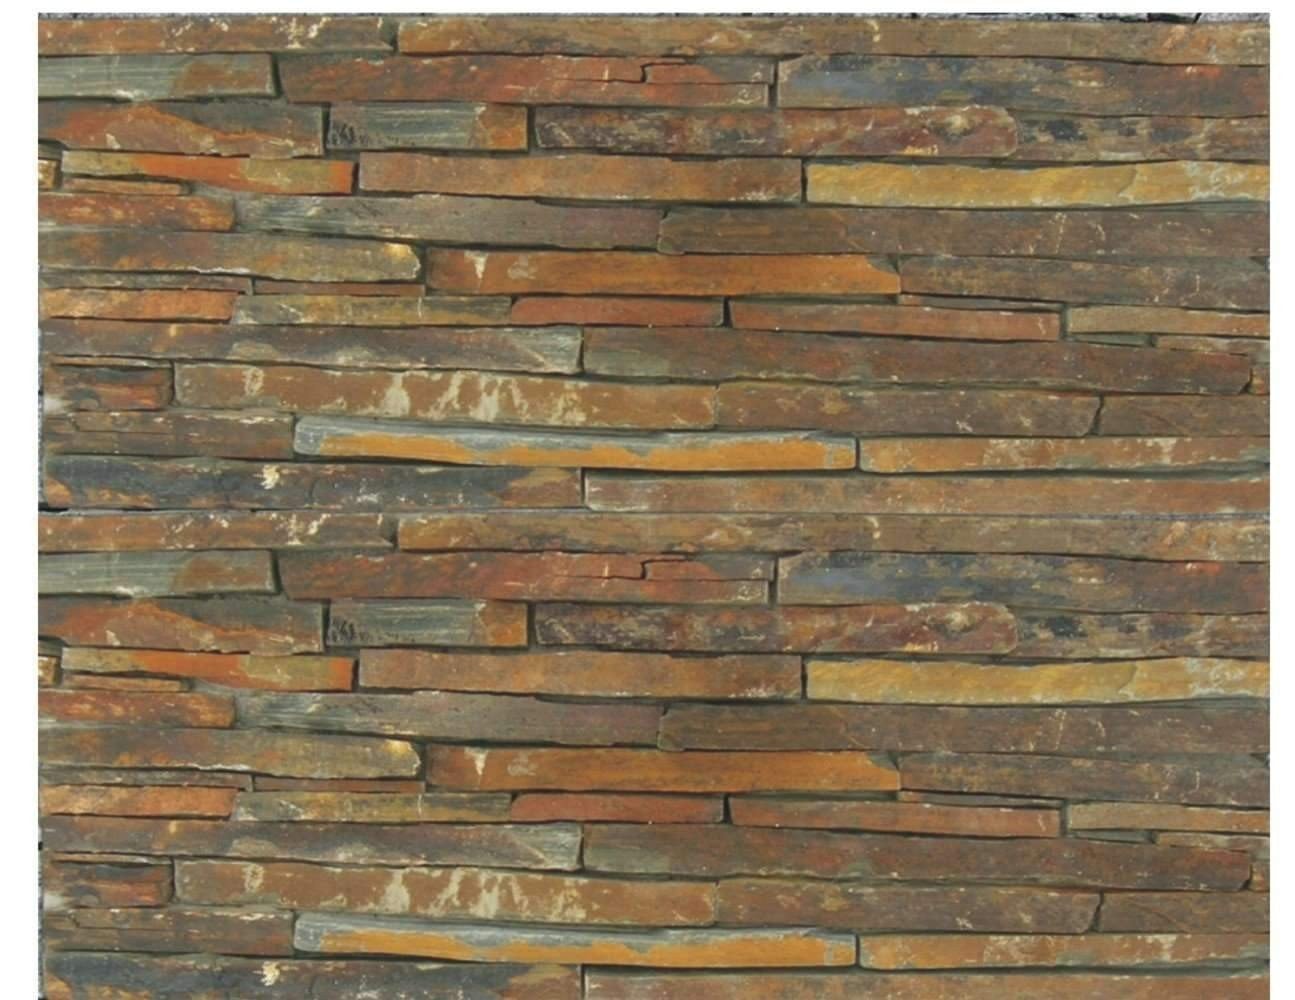 Multi China - Rough Cut Slate cheap stone veneer clearance - Discount Stones wholesale stone veneer, cheap brick veneer, cultured stone for sale